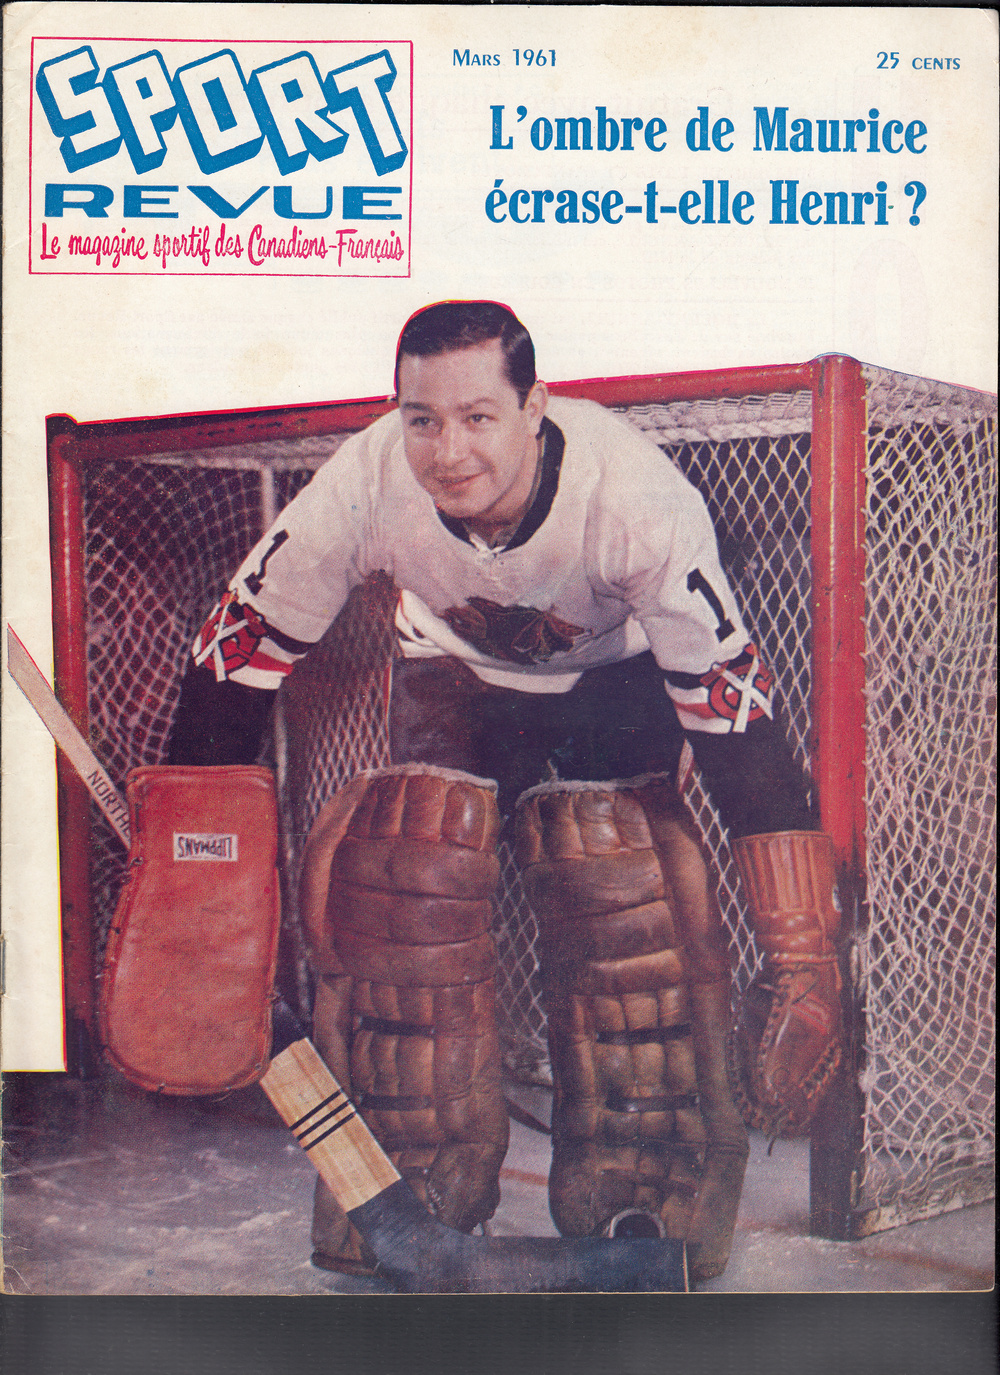 1961 SPORT REVUE MAGAZINE G. HALL ON COVER photo